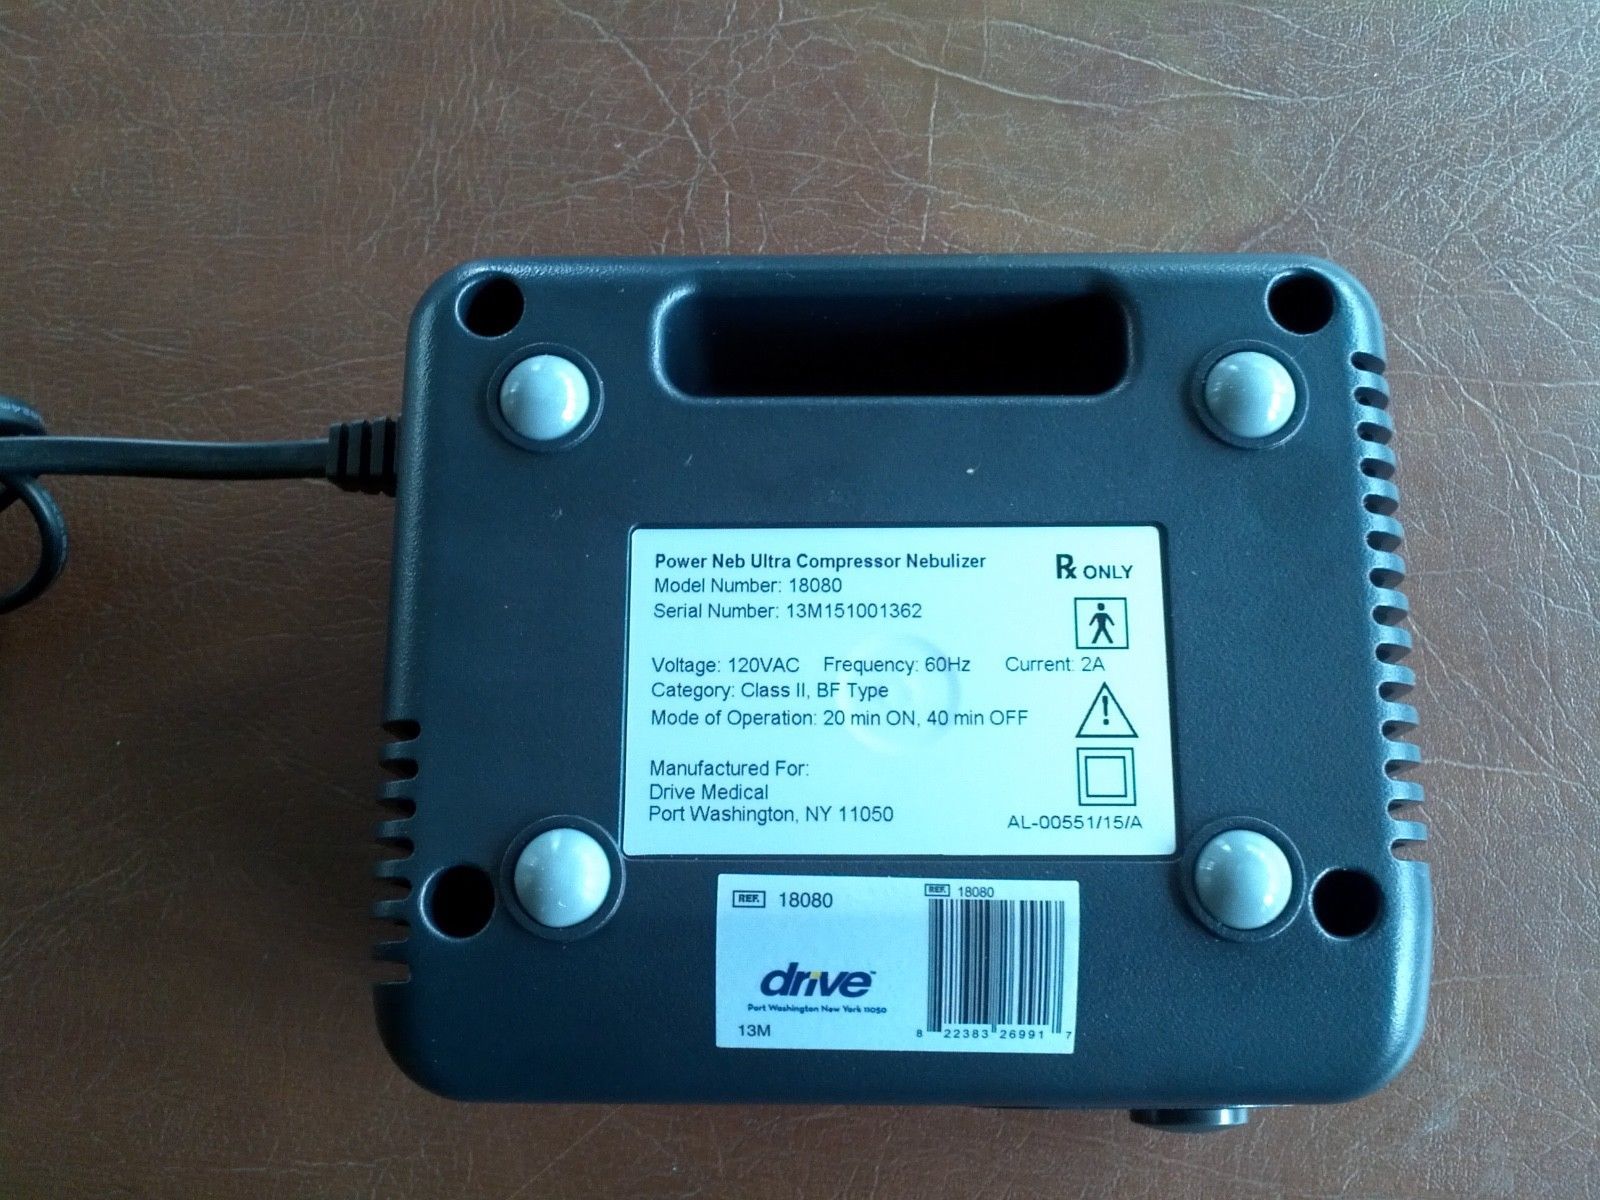 Powerneb Compressor Nebulizer 18080 User Manual